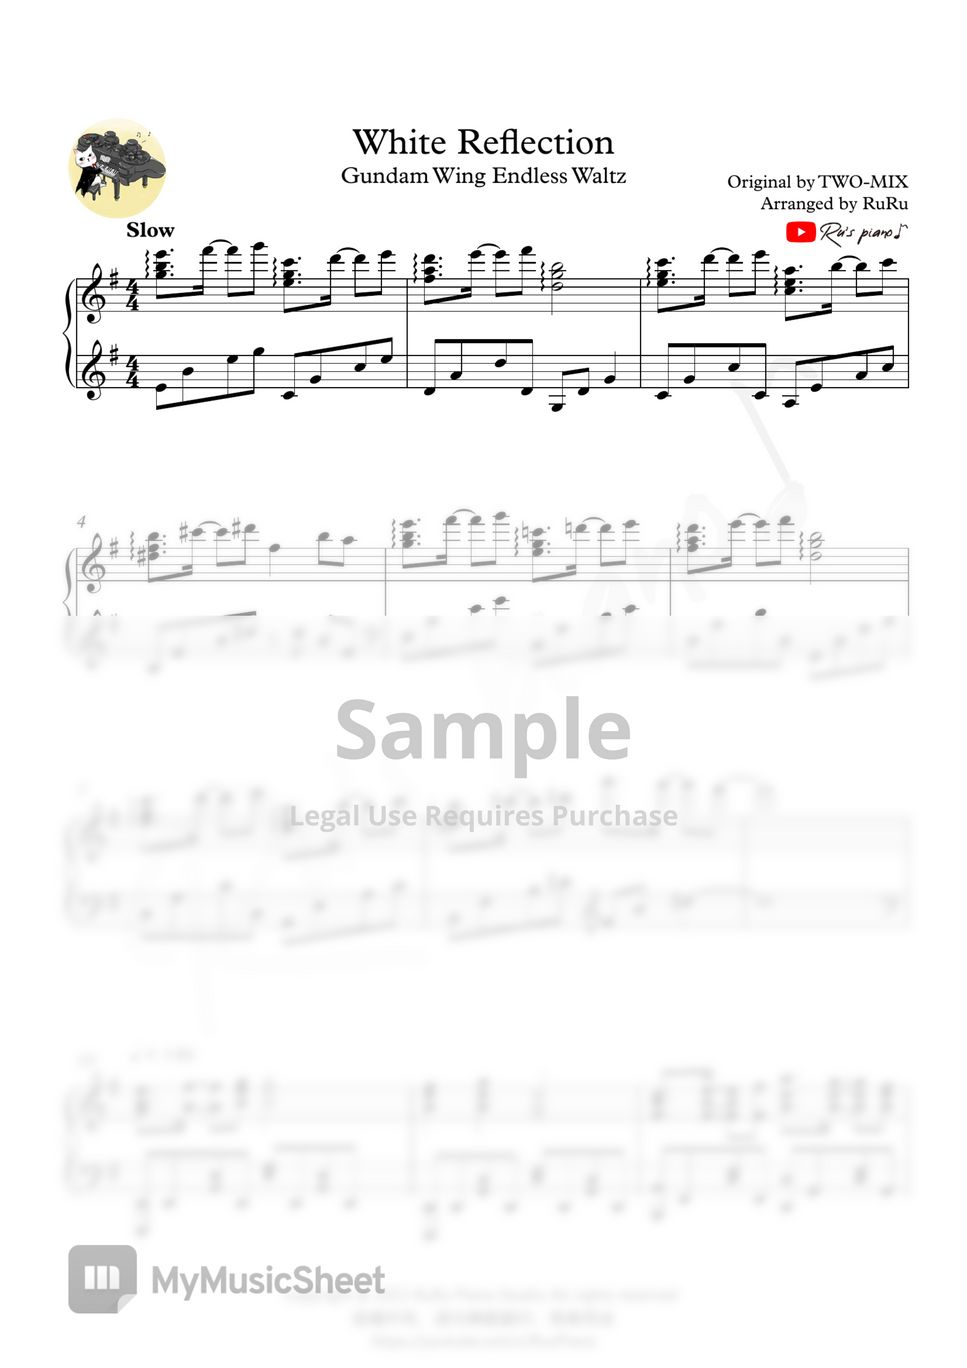 Gundam Wing Endless Waltz Theme - White Reflection (2022 ver.) by Ru's Piano